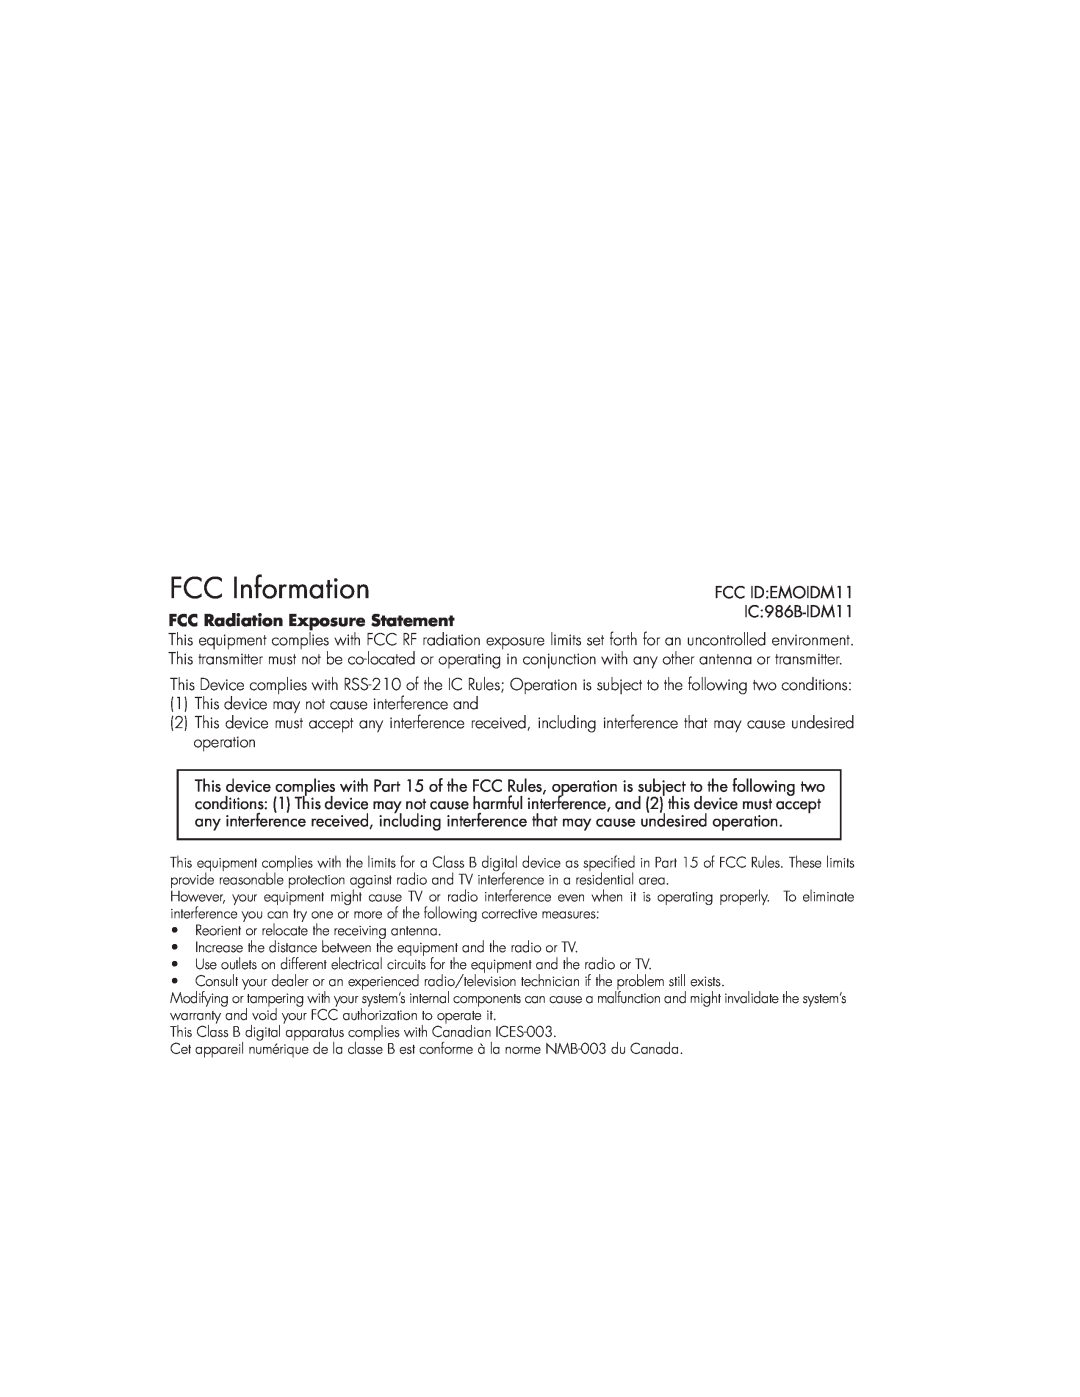 iHome iDM11 manual FCC Information, FCC Radiation Exposure Statement 